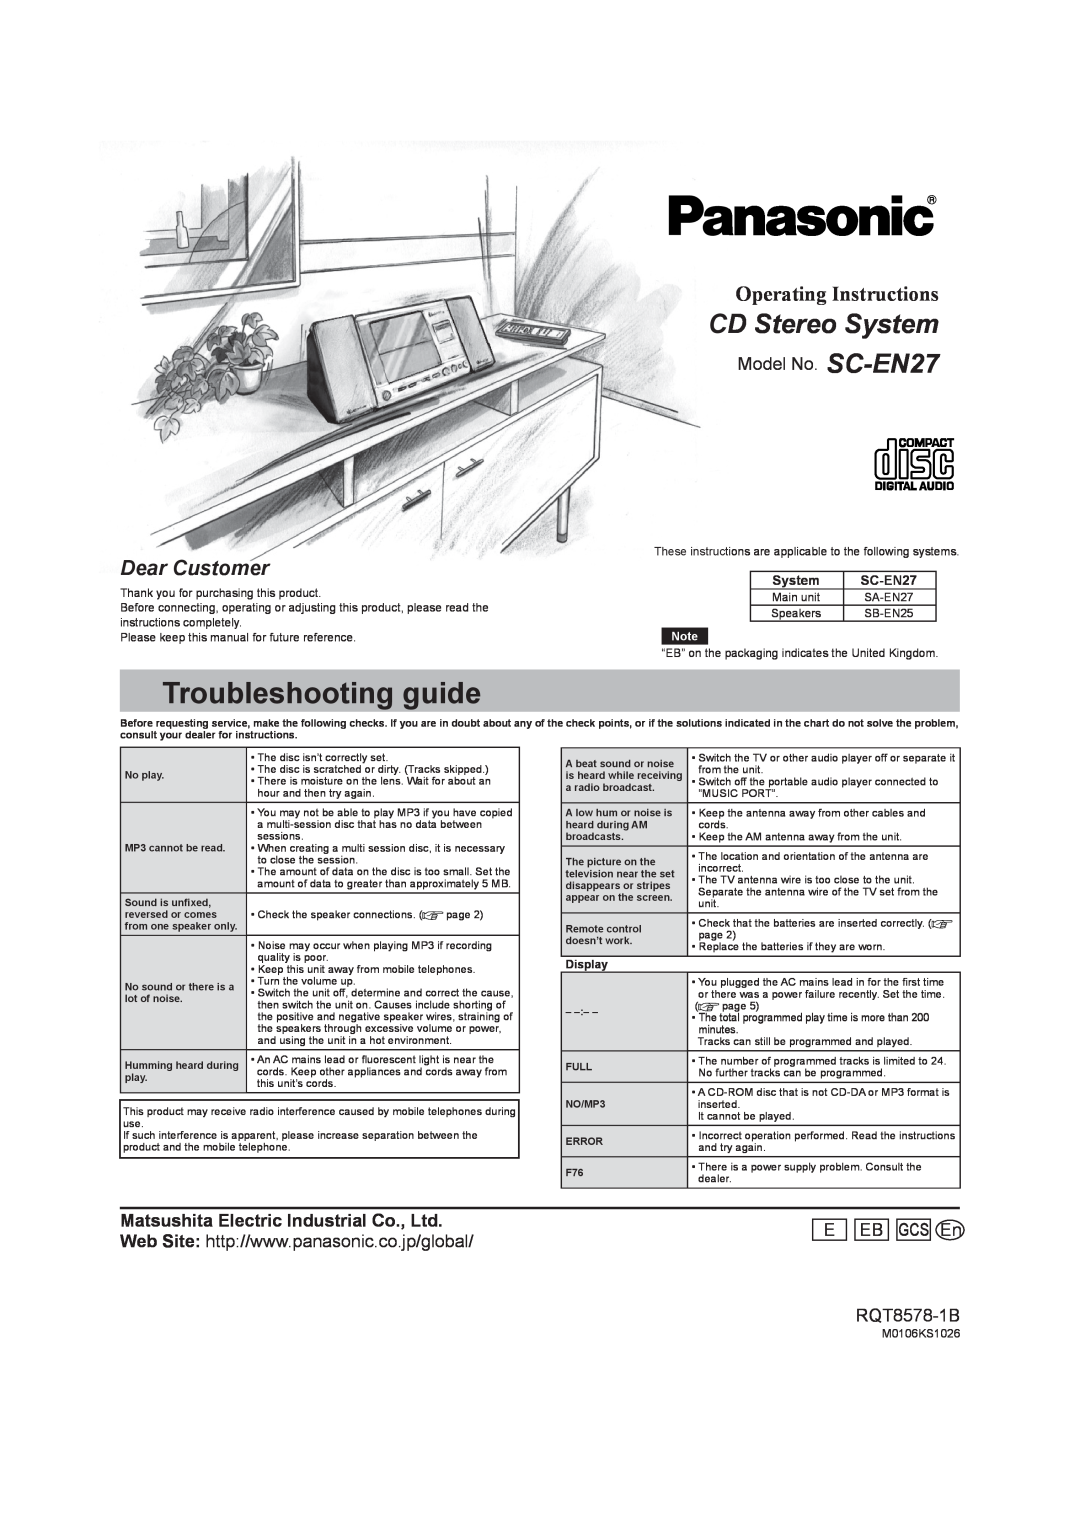 Panasonic manual Troubleshooting guide, CD Stereo System, Operating Instructions, Model No. SC-EN27, EB GCS En 